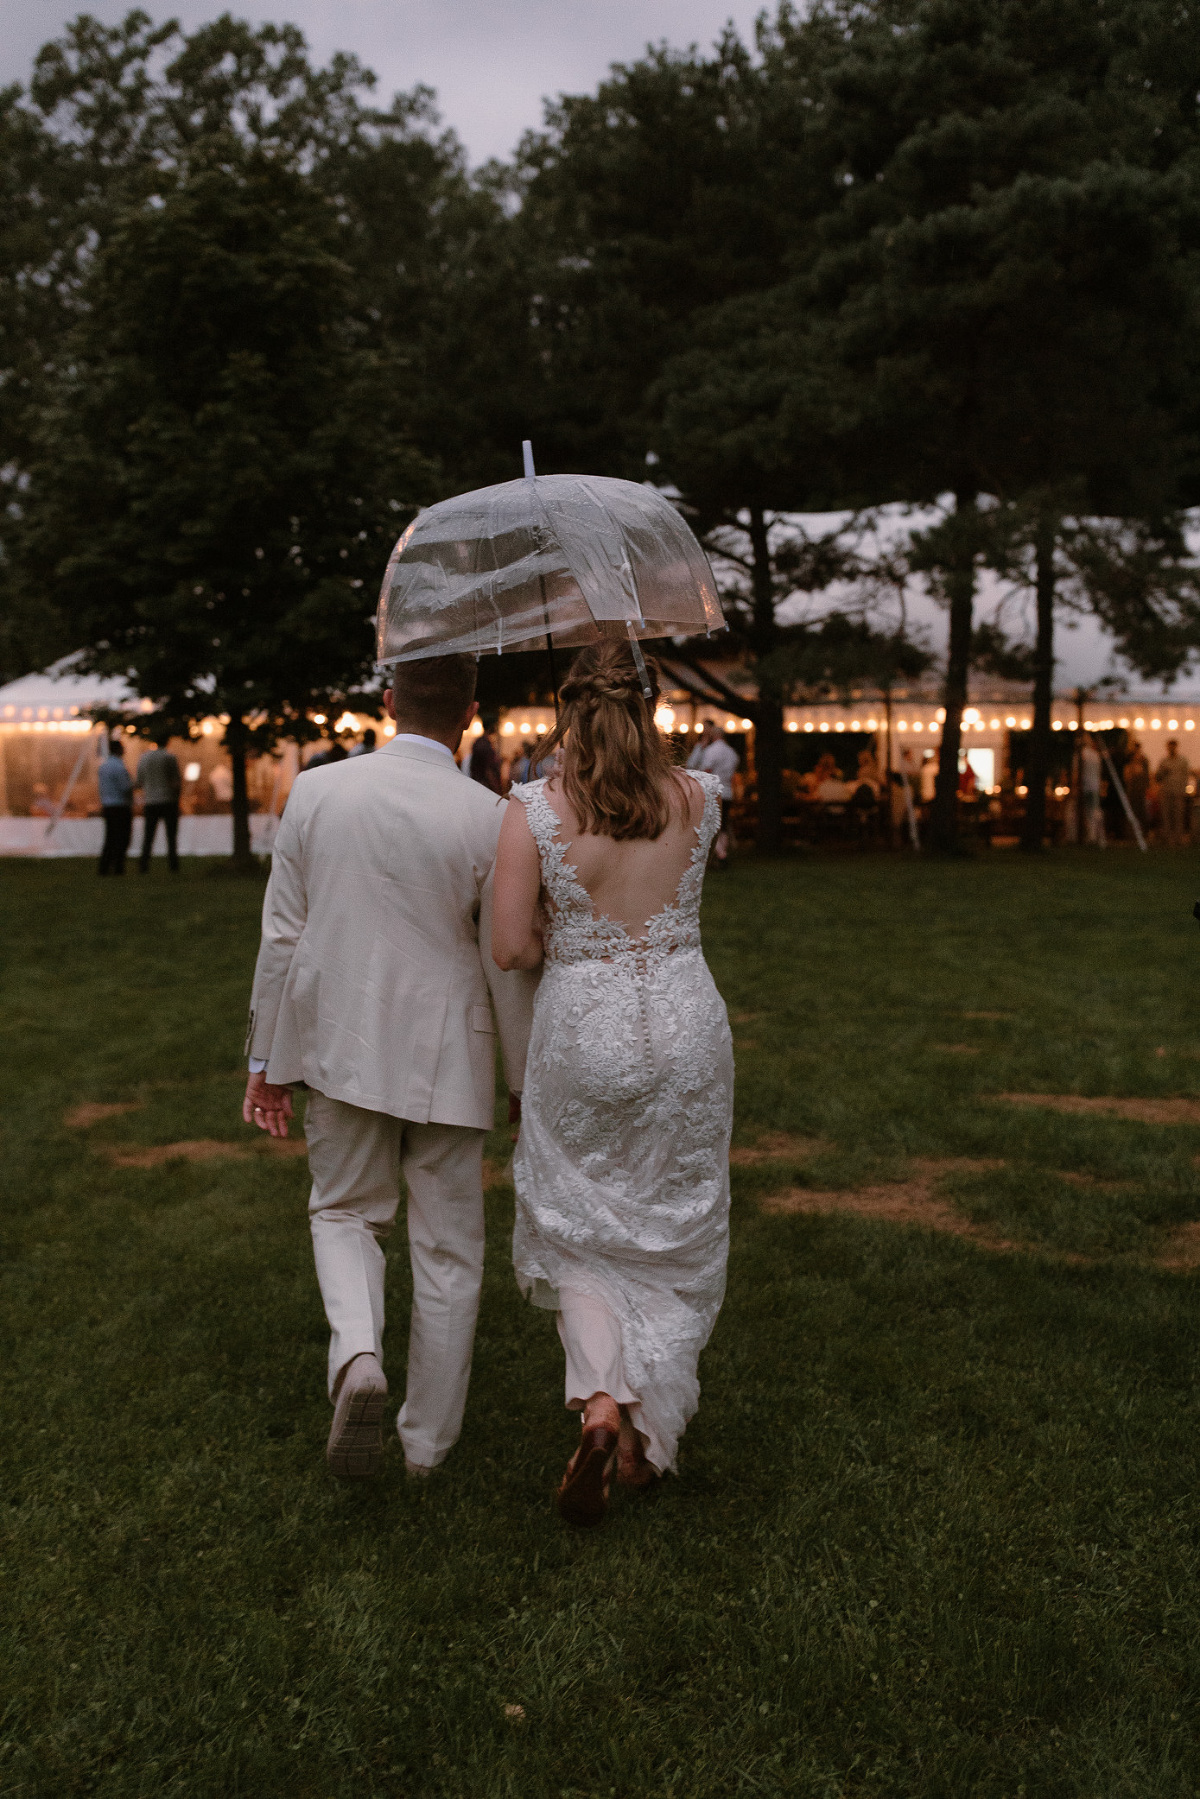 walking to wedding reception in the rain under an umbrella